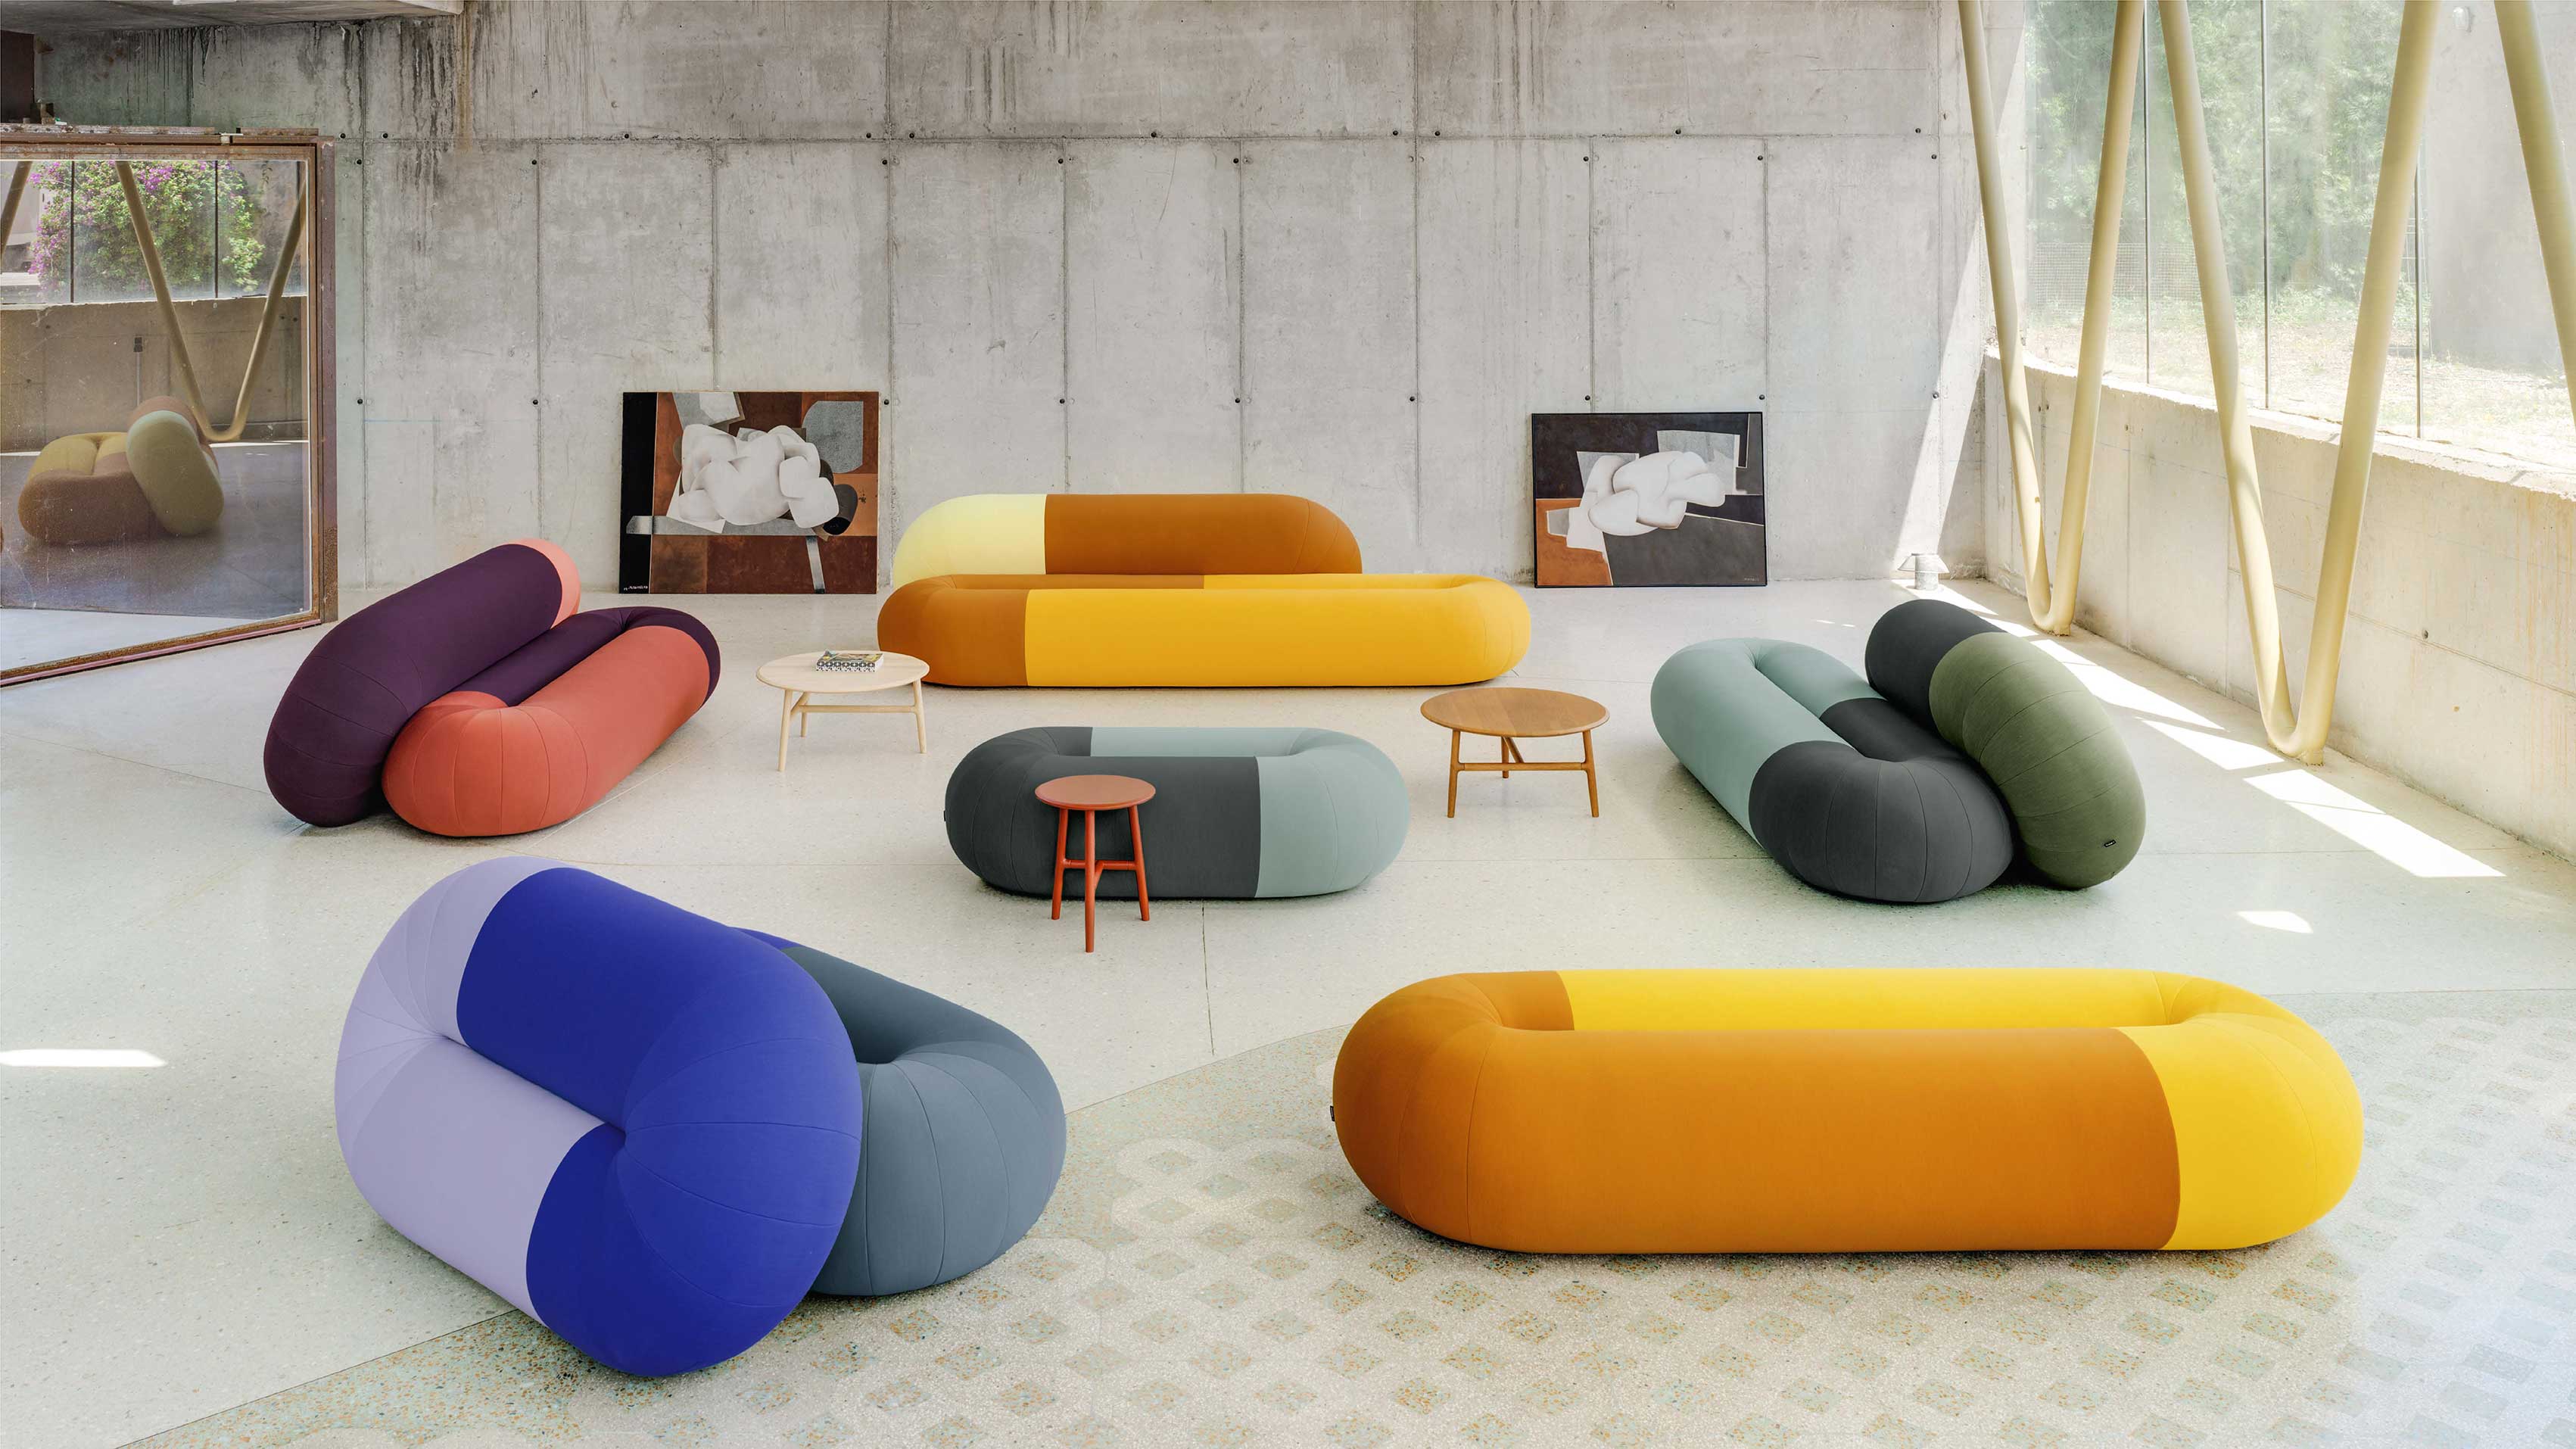 Verlenen Portaal hefboom Sancal x Studio Raw Color's Link & Loop sofa collection makes furniture  fun! | Ayushi Mathur News | STIRpad